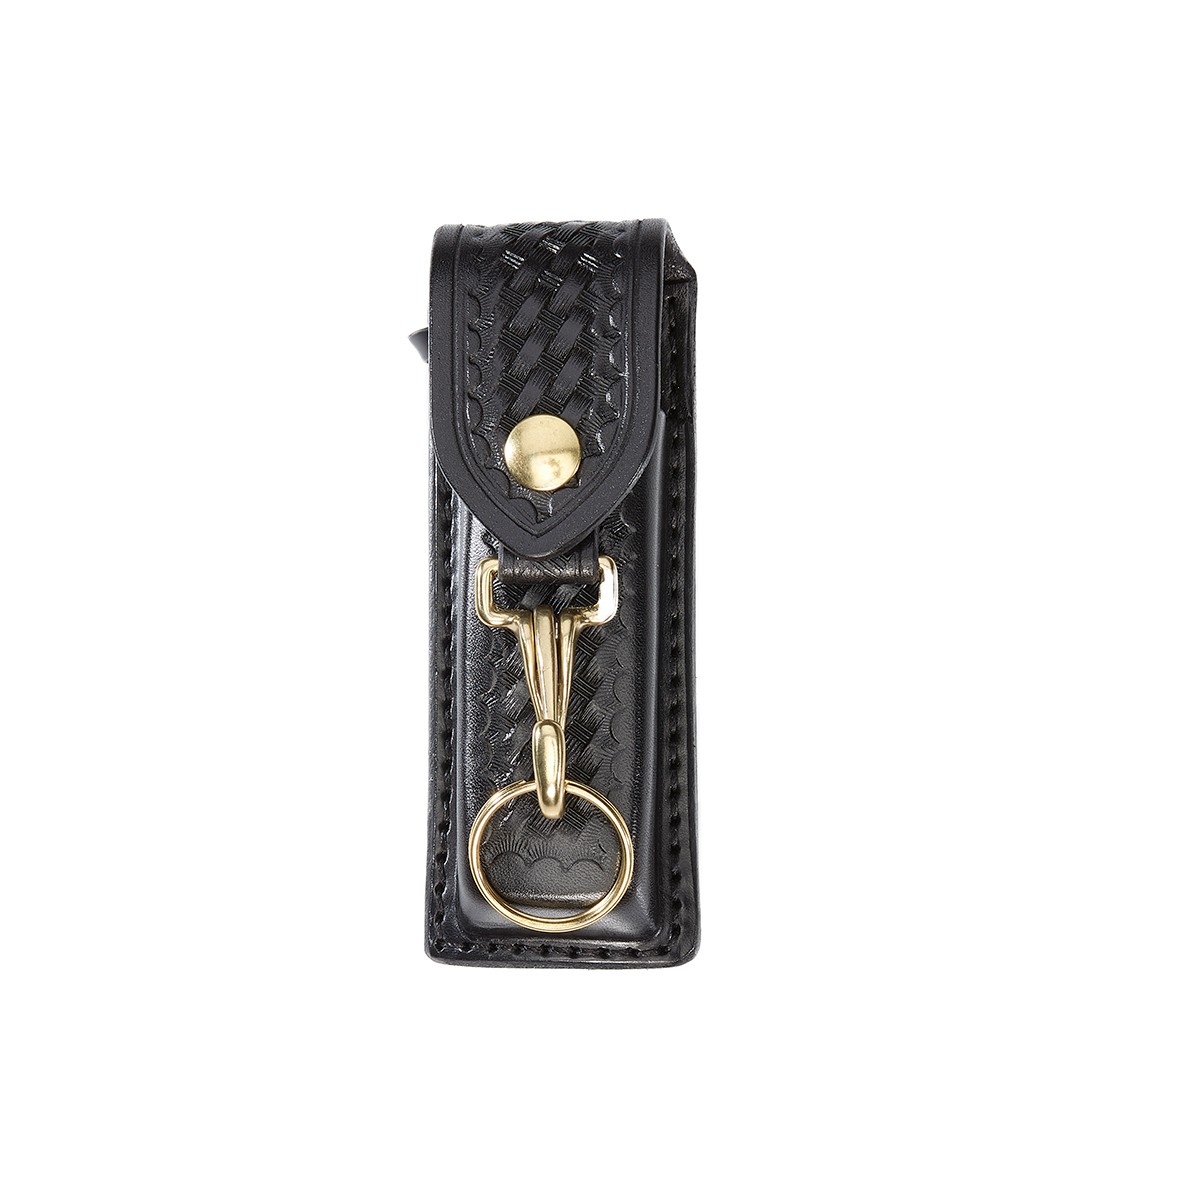 Arafat international Zipper Designer Leather Key Holder Pouch